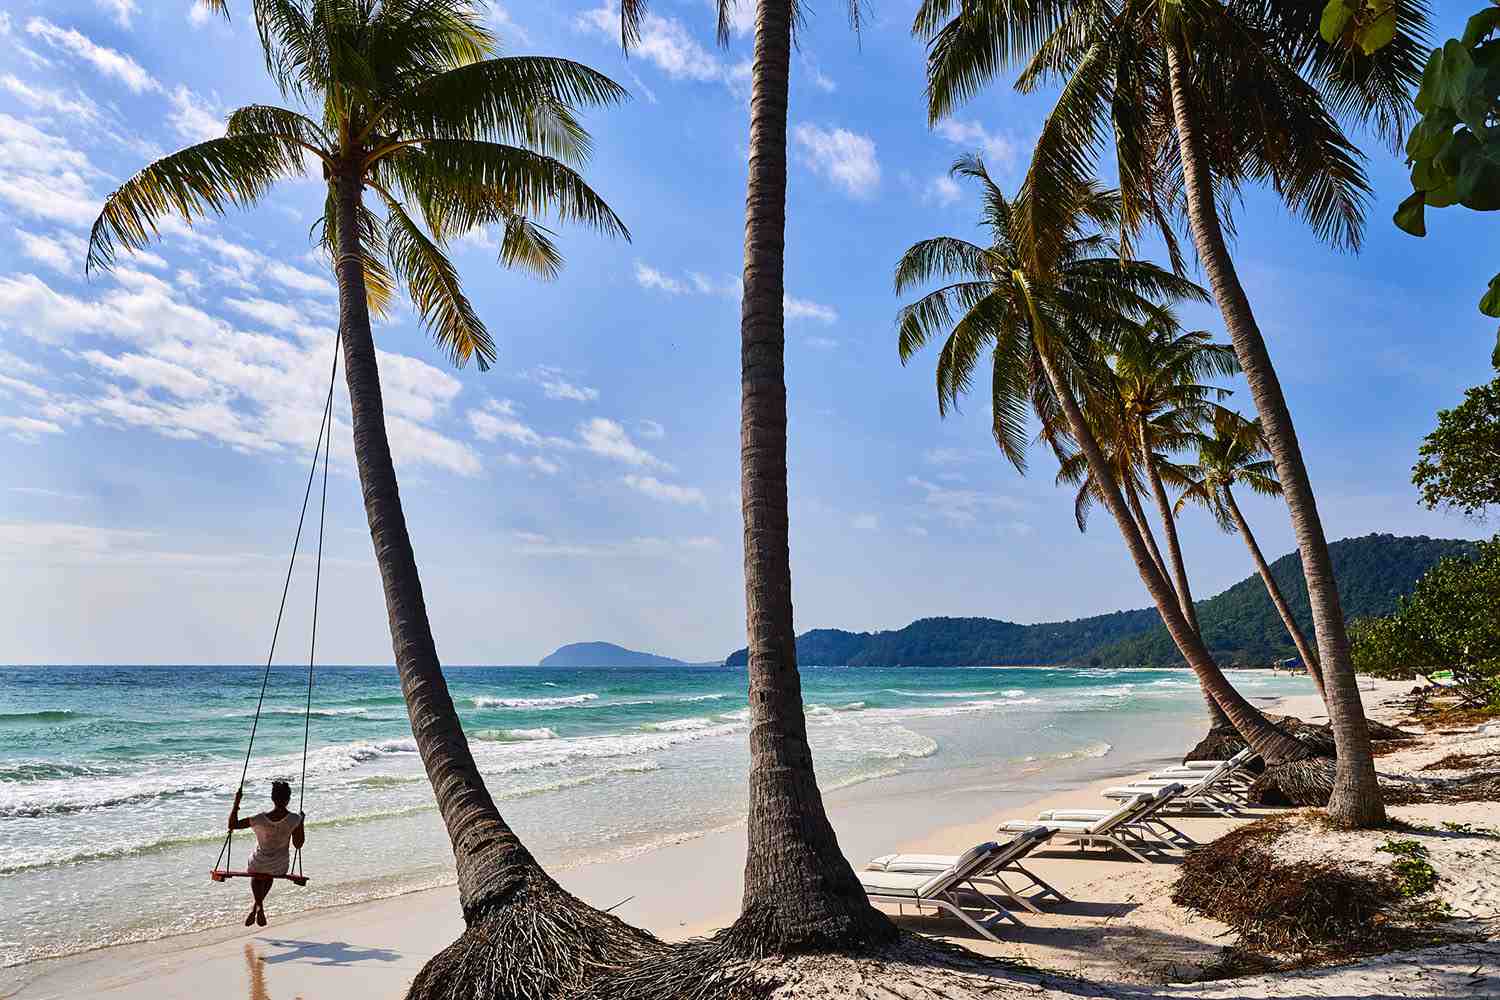 «вьетнам. контраст о.фукуок и г.нячанг» thanh kieu beach resort, архипелаг фукуок, вьетнам. отзыв туриста